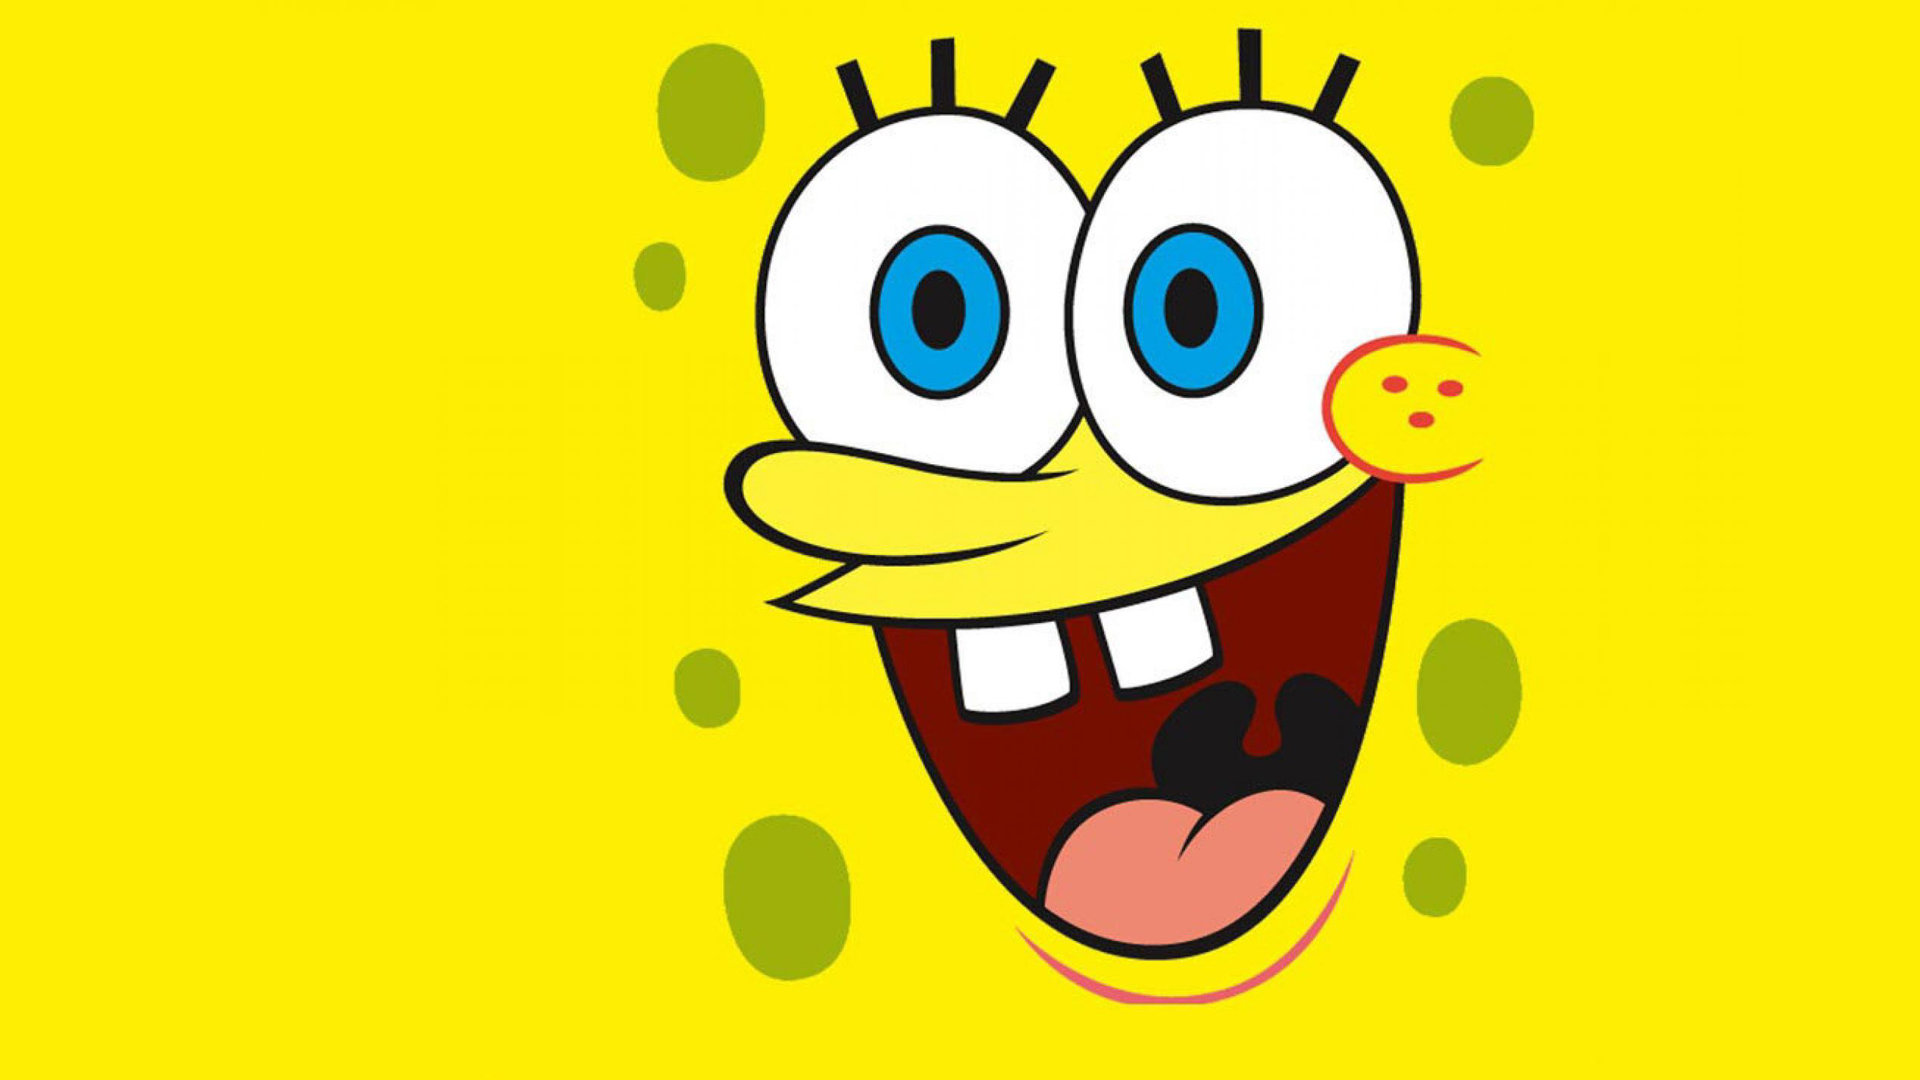 Download Full Hd Spongebob Squarepants Desktop Wallpaper - Have A Wacky Wednesday - HD Wallpaper 